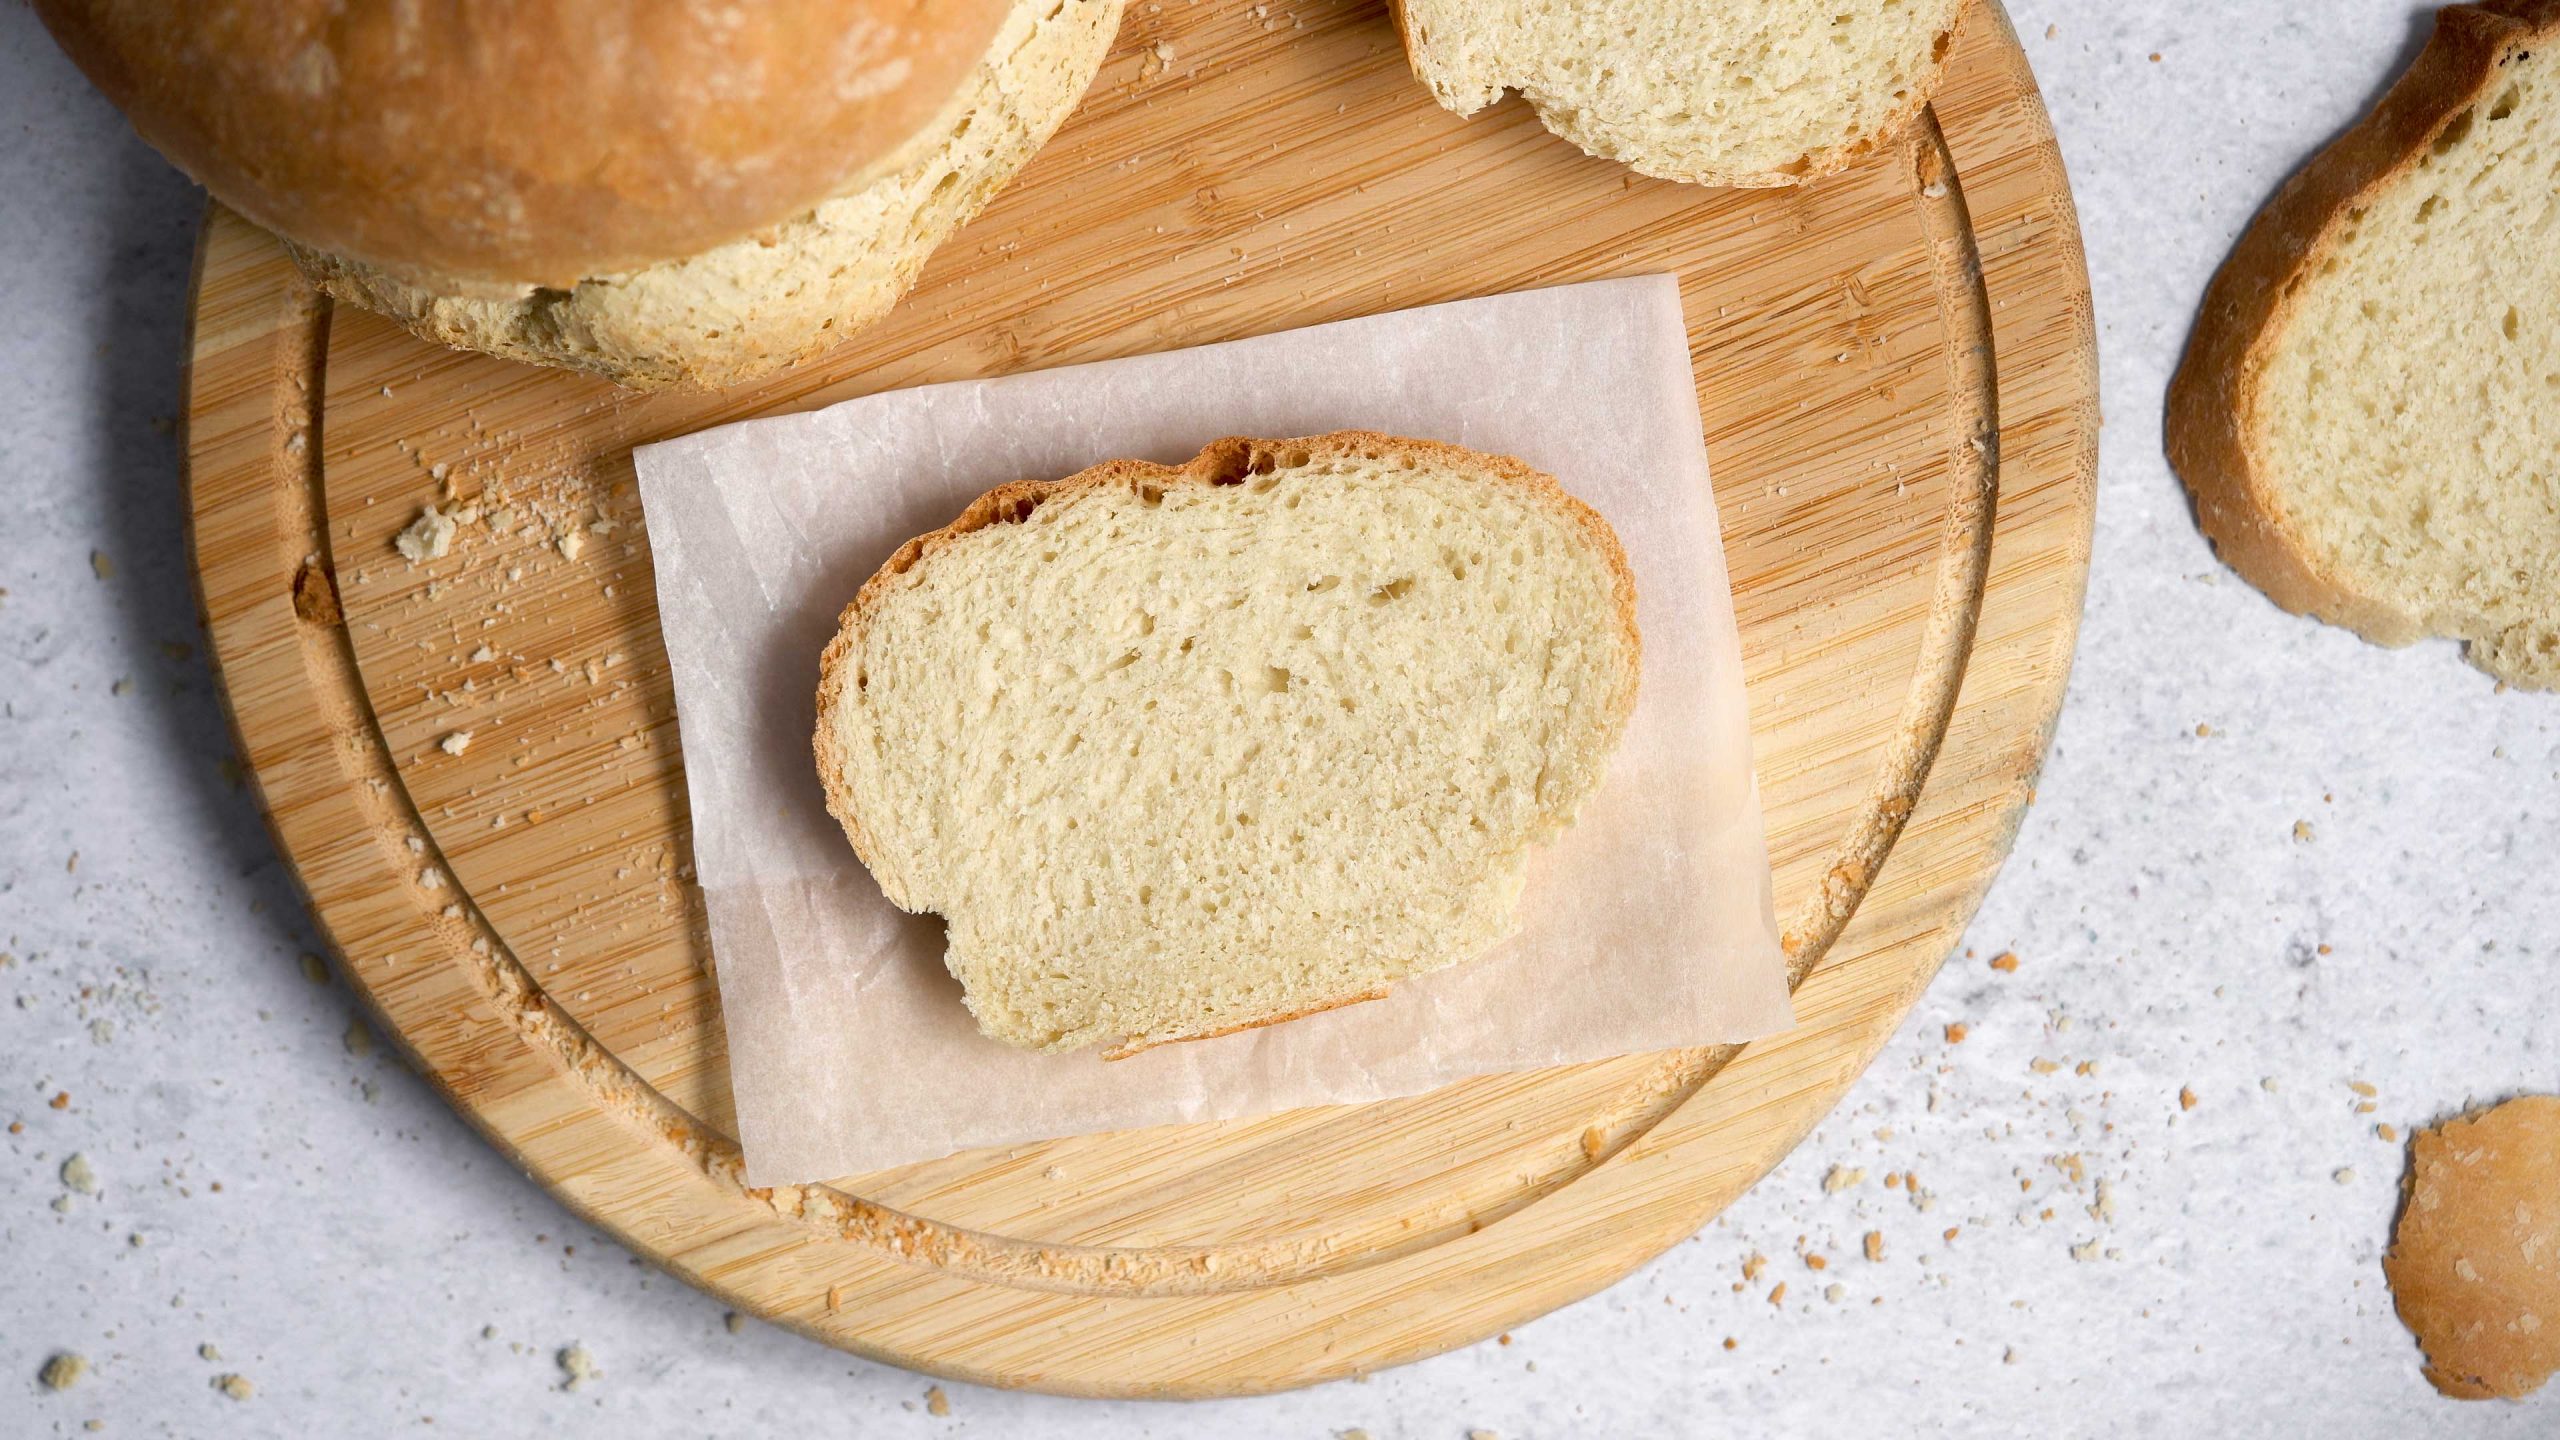 Pročitajte više o članku Pirov kruh iz Magimixa